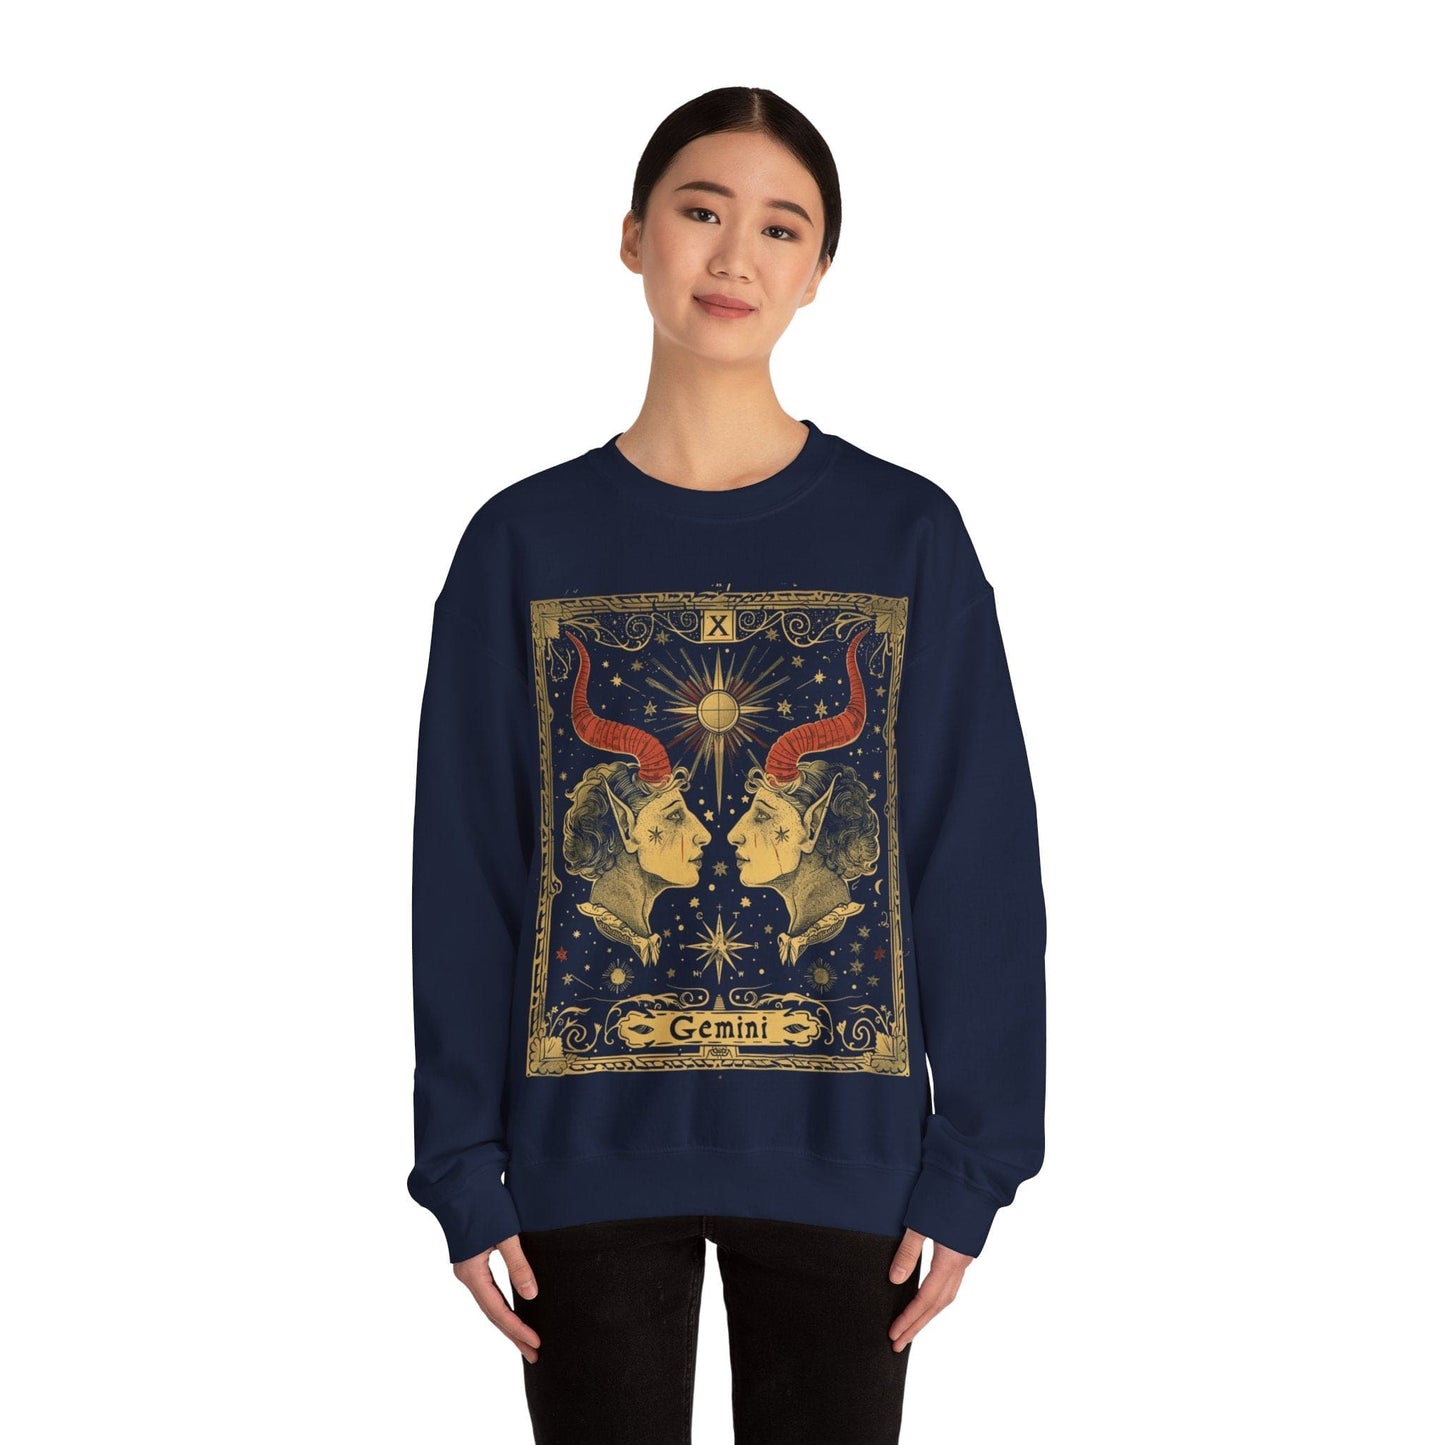 Sweatshirt Celestial Duet Gemini Sweater: Harmonized Contrasts